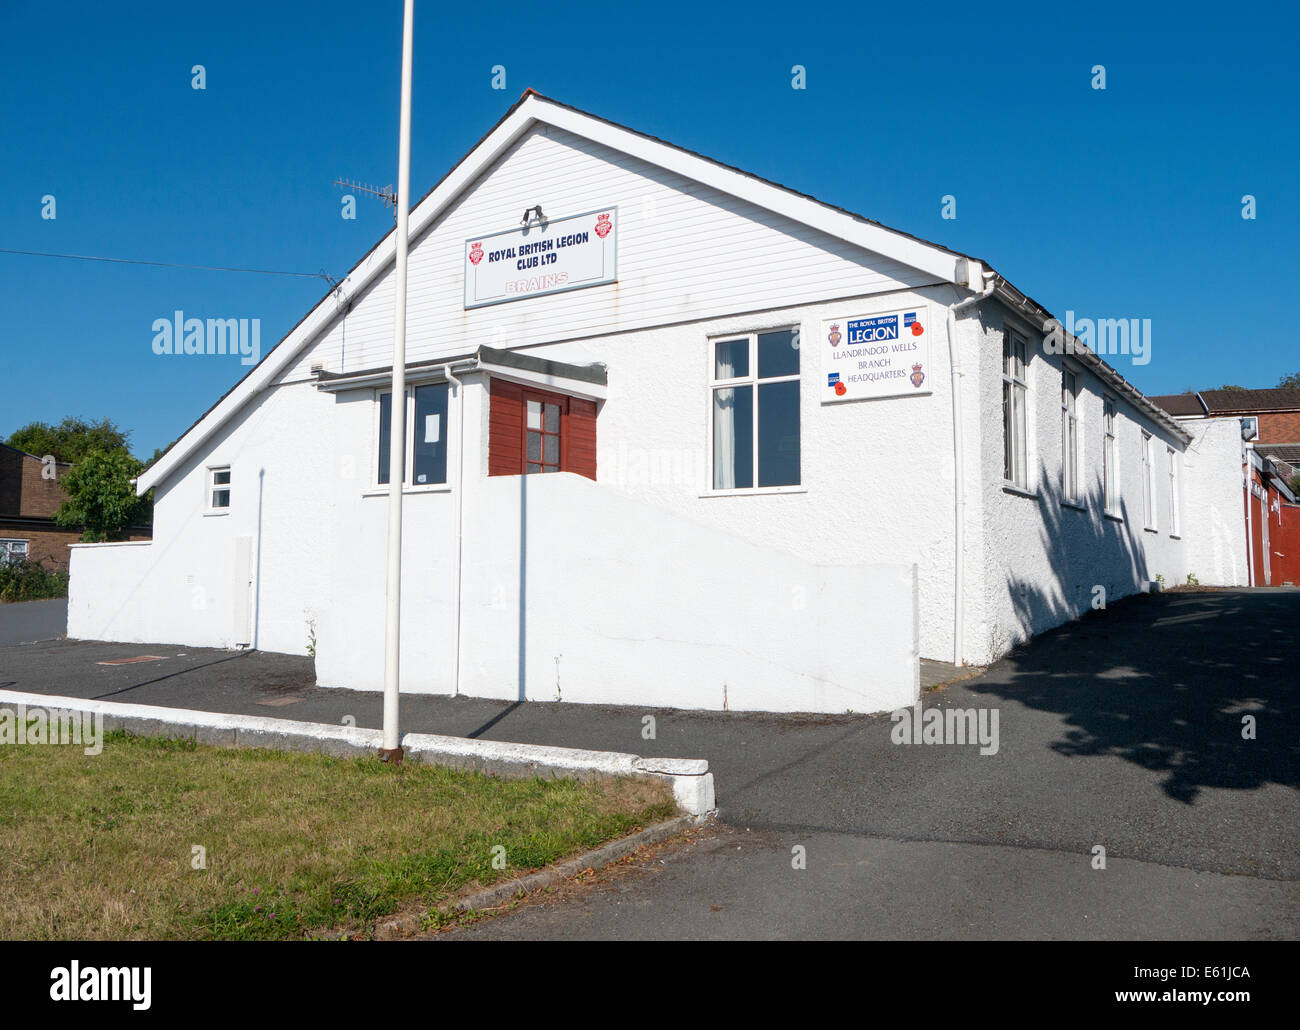 Royal British Legion Club building, Llandrindod Wells, Powys Wales UK Stock Photo